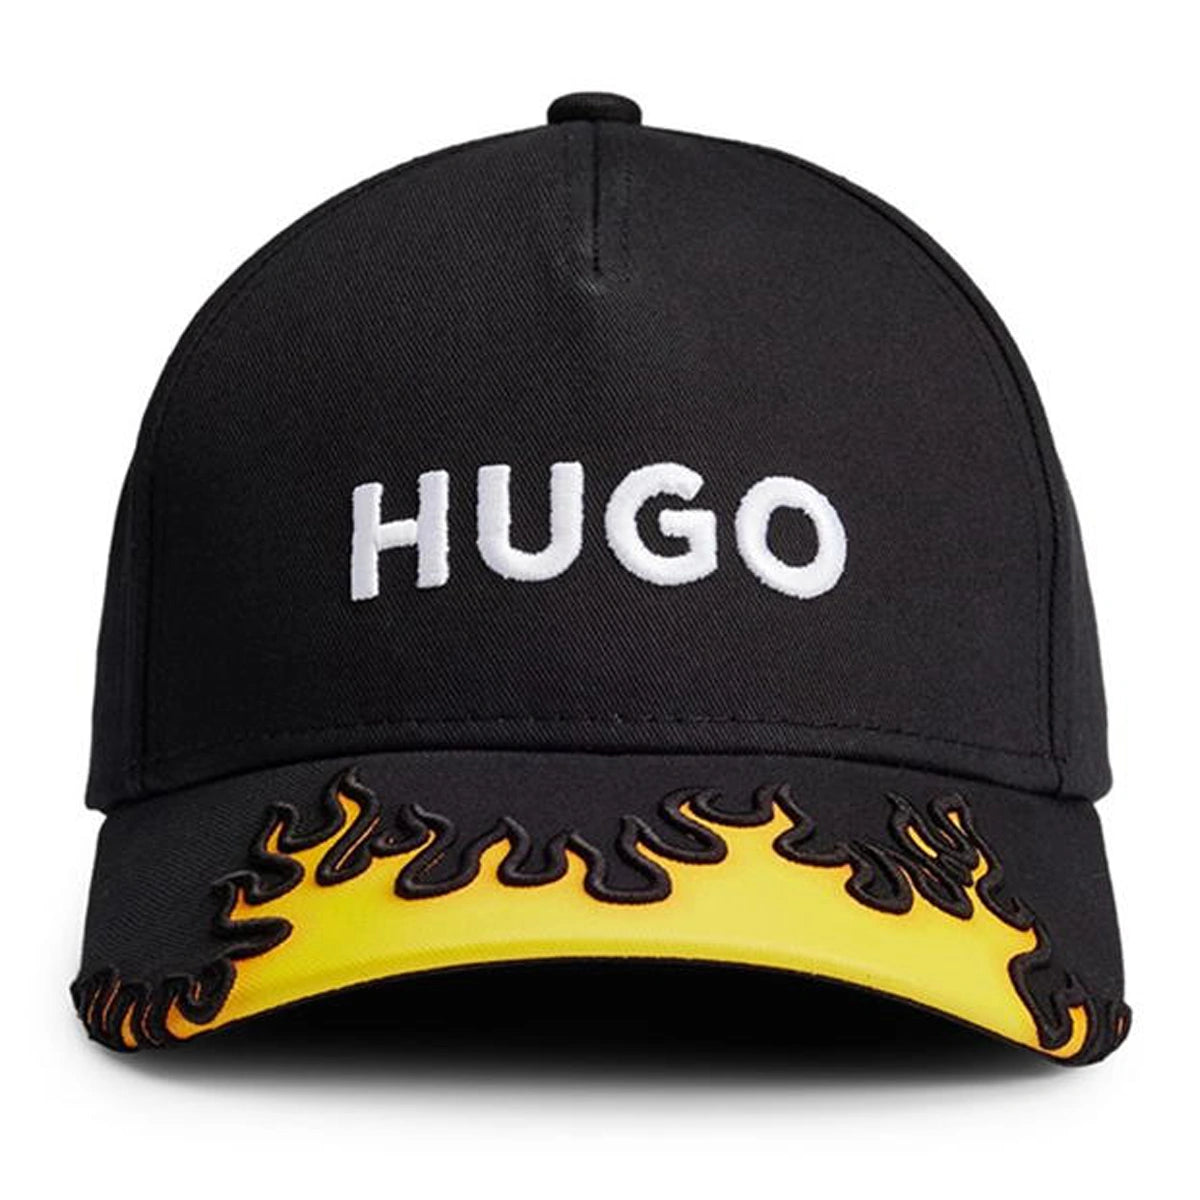 Hugo Flame Men’s Black Caps